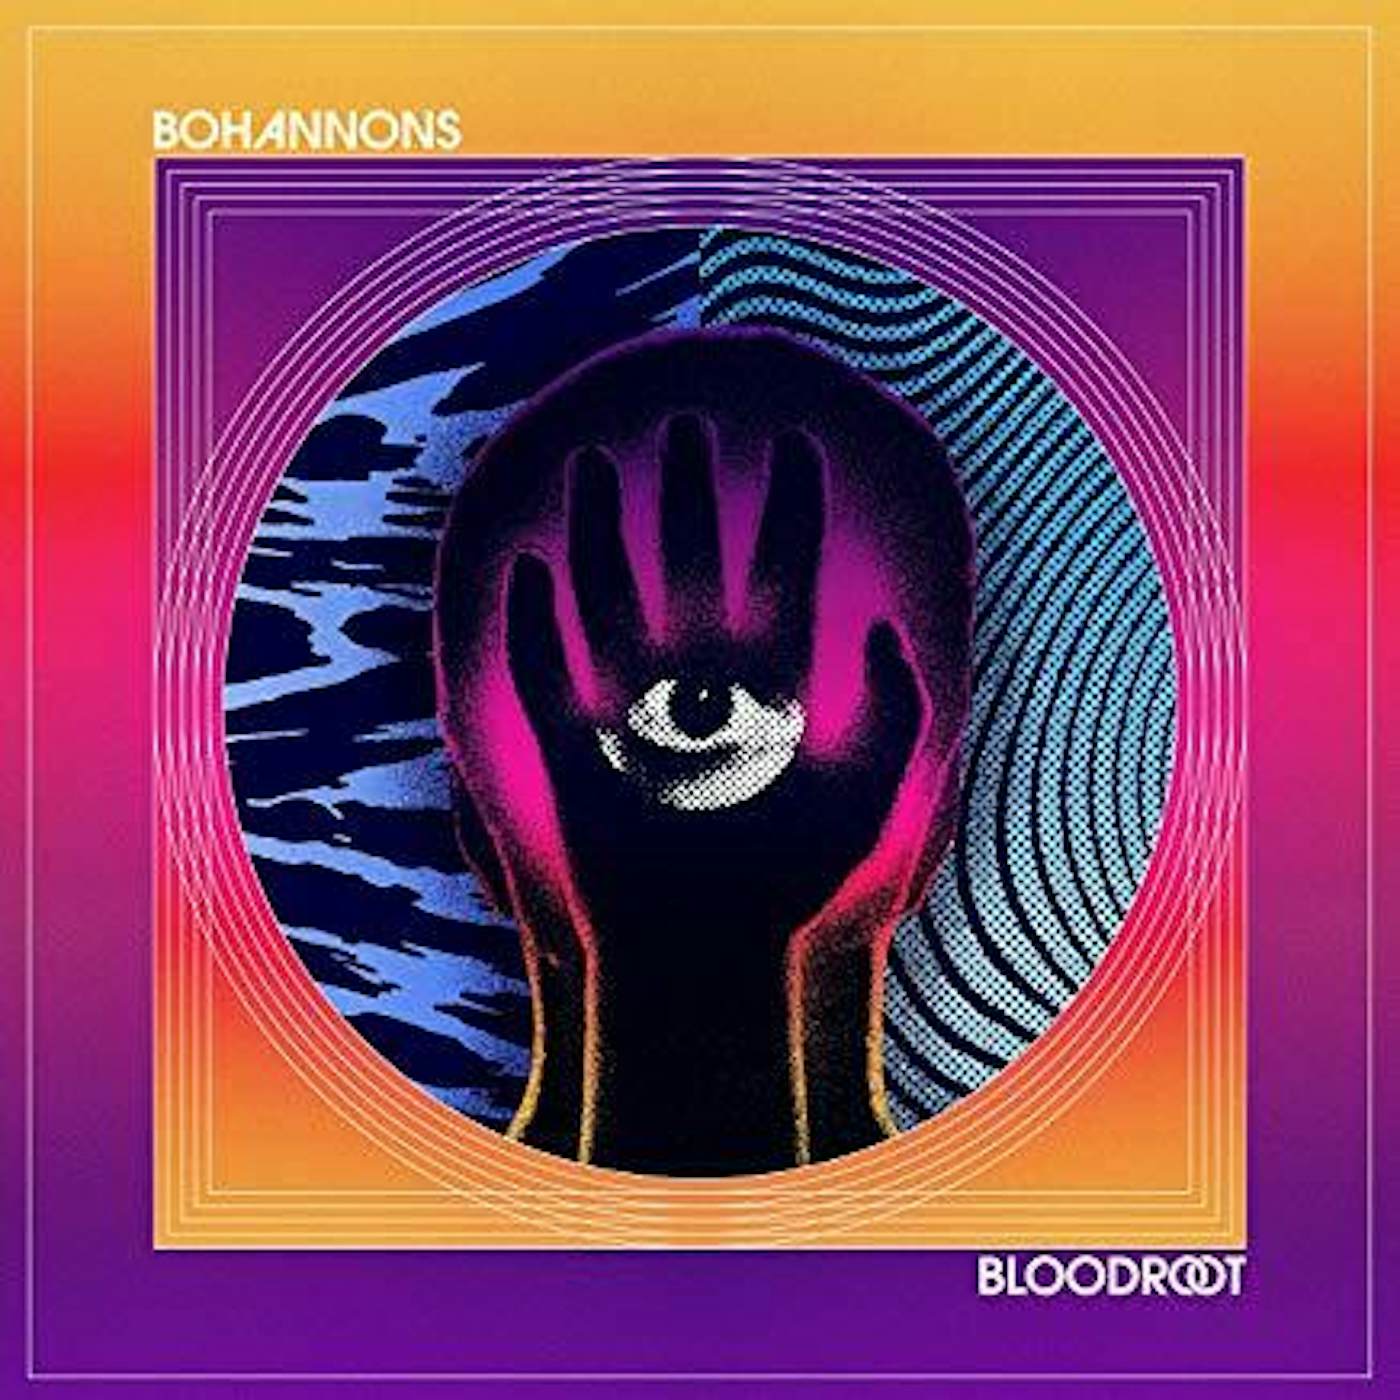 Bohannons Bloodroot Vinyl Record